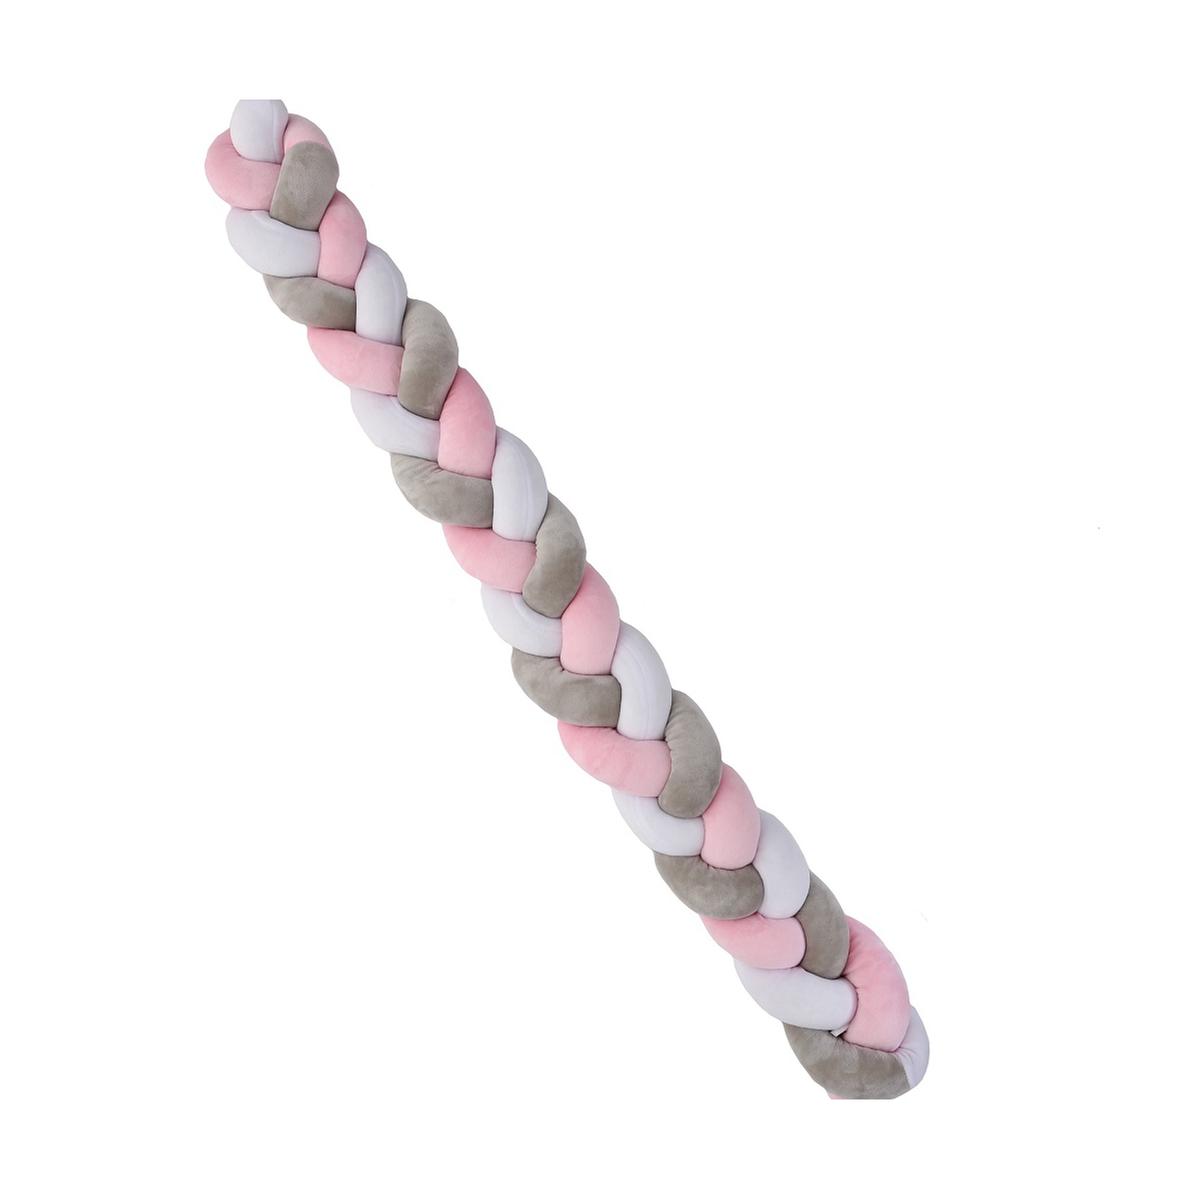 Plastimyr - Protetor de Berço Twist Rosa, Cinzento e Branco 200 cm |  Plastimyr | Loja de brinquedos e videojogos Online Toysrus